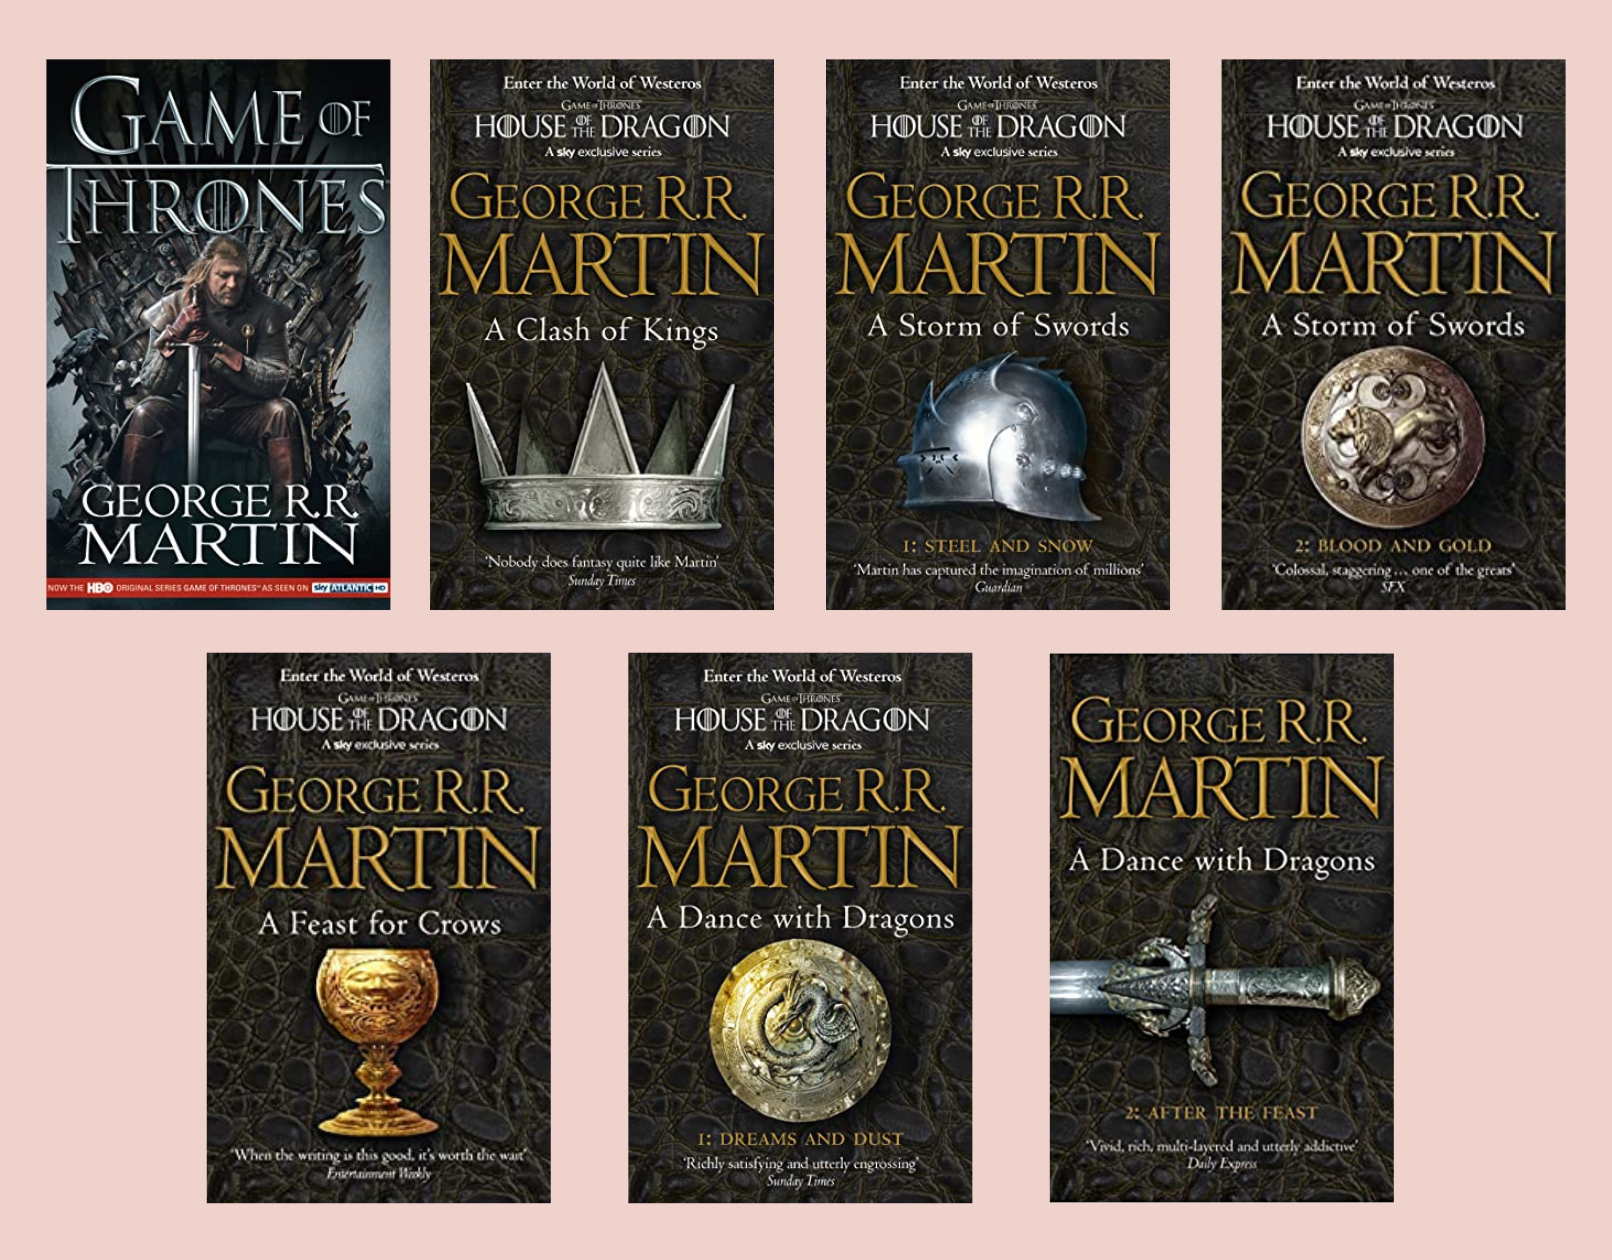 https://mmbbookblog.com/wp-content/uploads/2022/12/game-of-thrones-books-in-order-1-e1670957688296.png